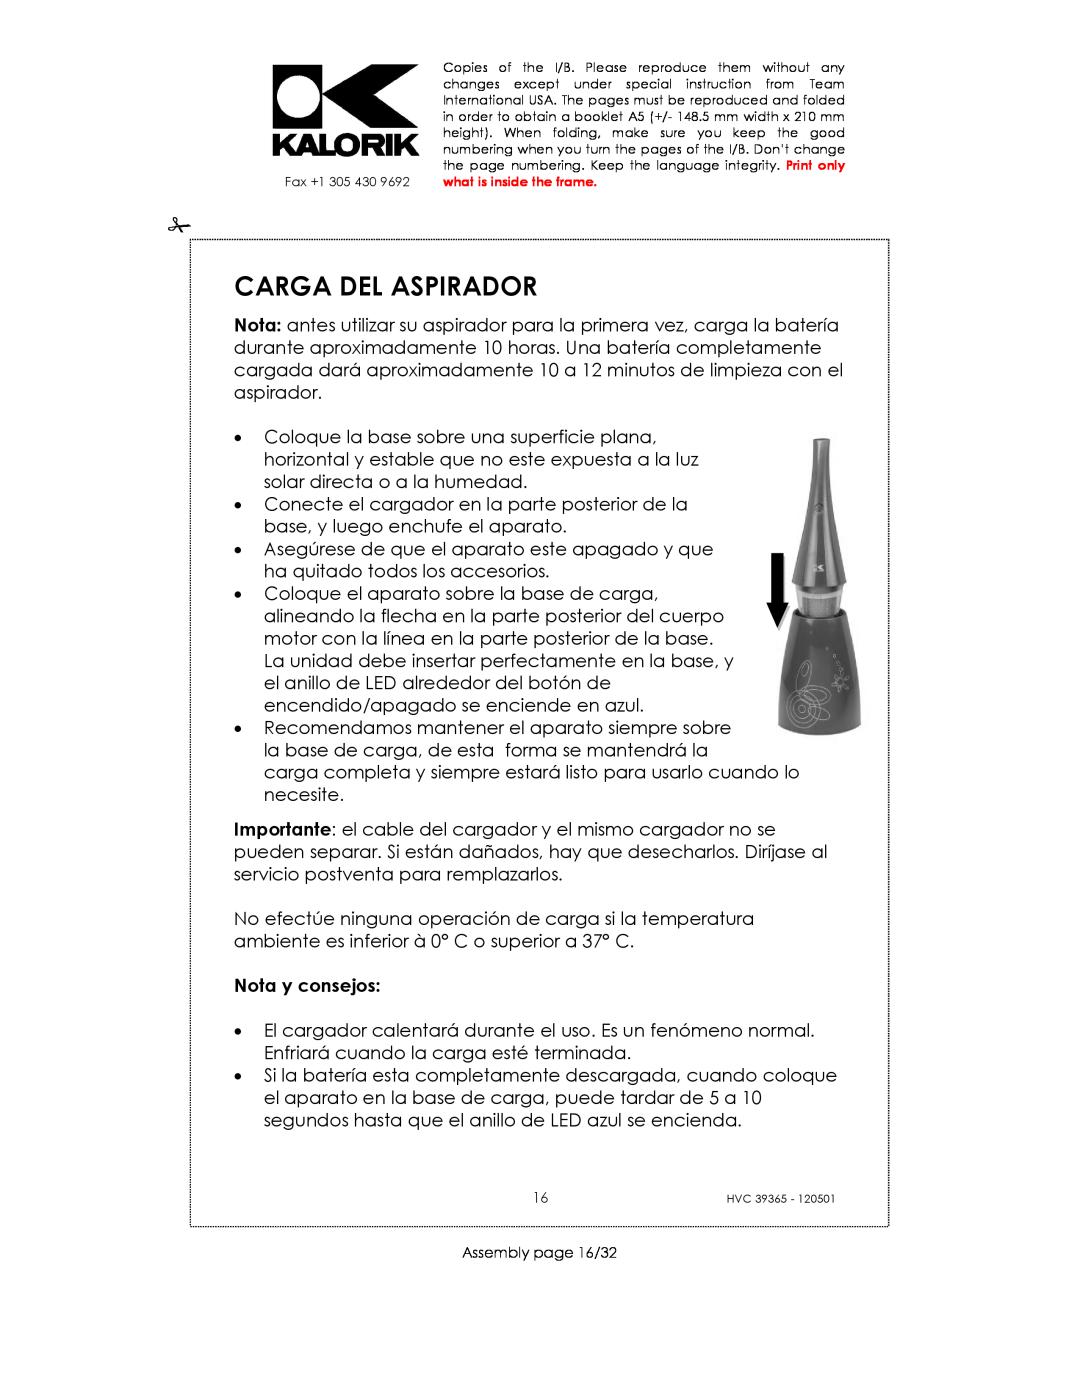 Kalorik HVC 39365 manual Carga Del Aspirador, Nota y consejos 